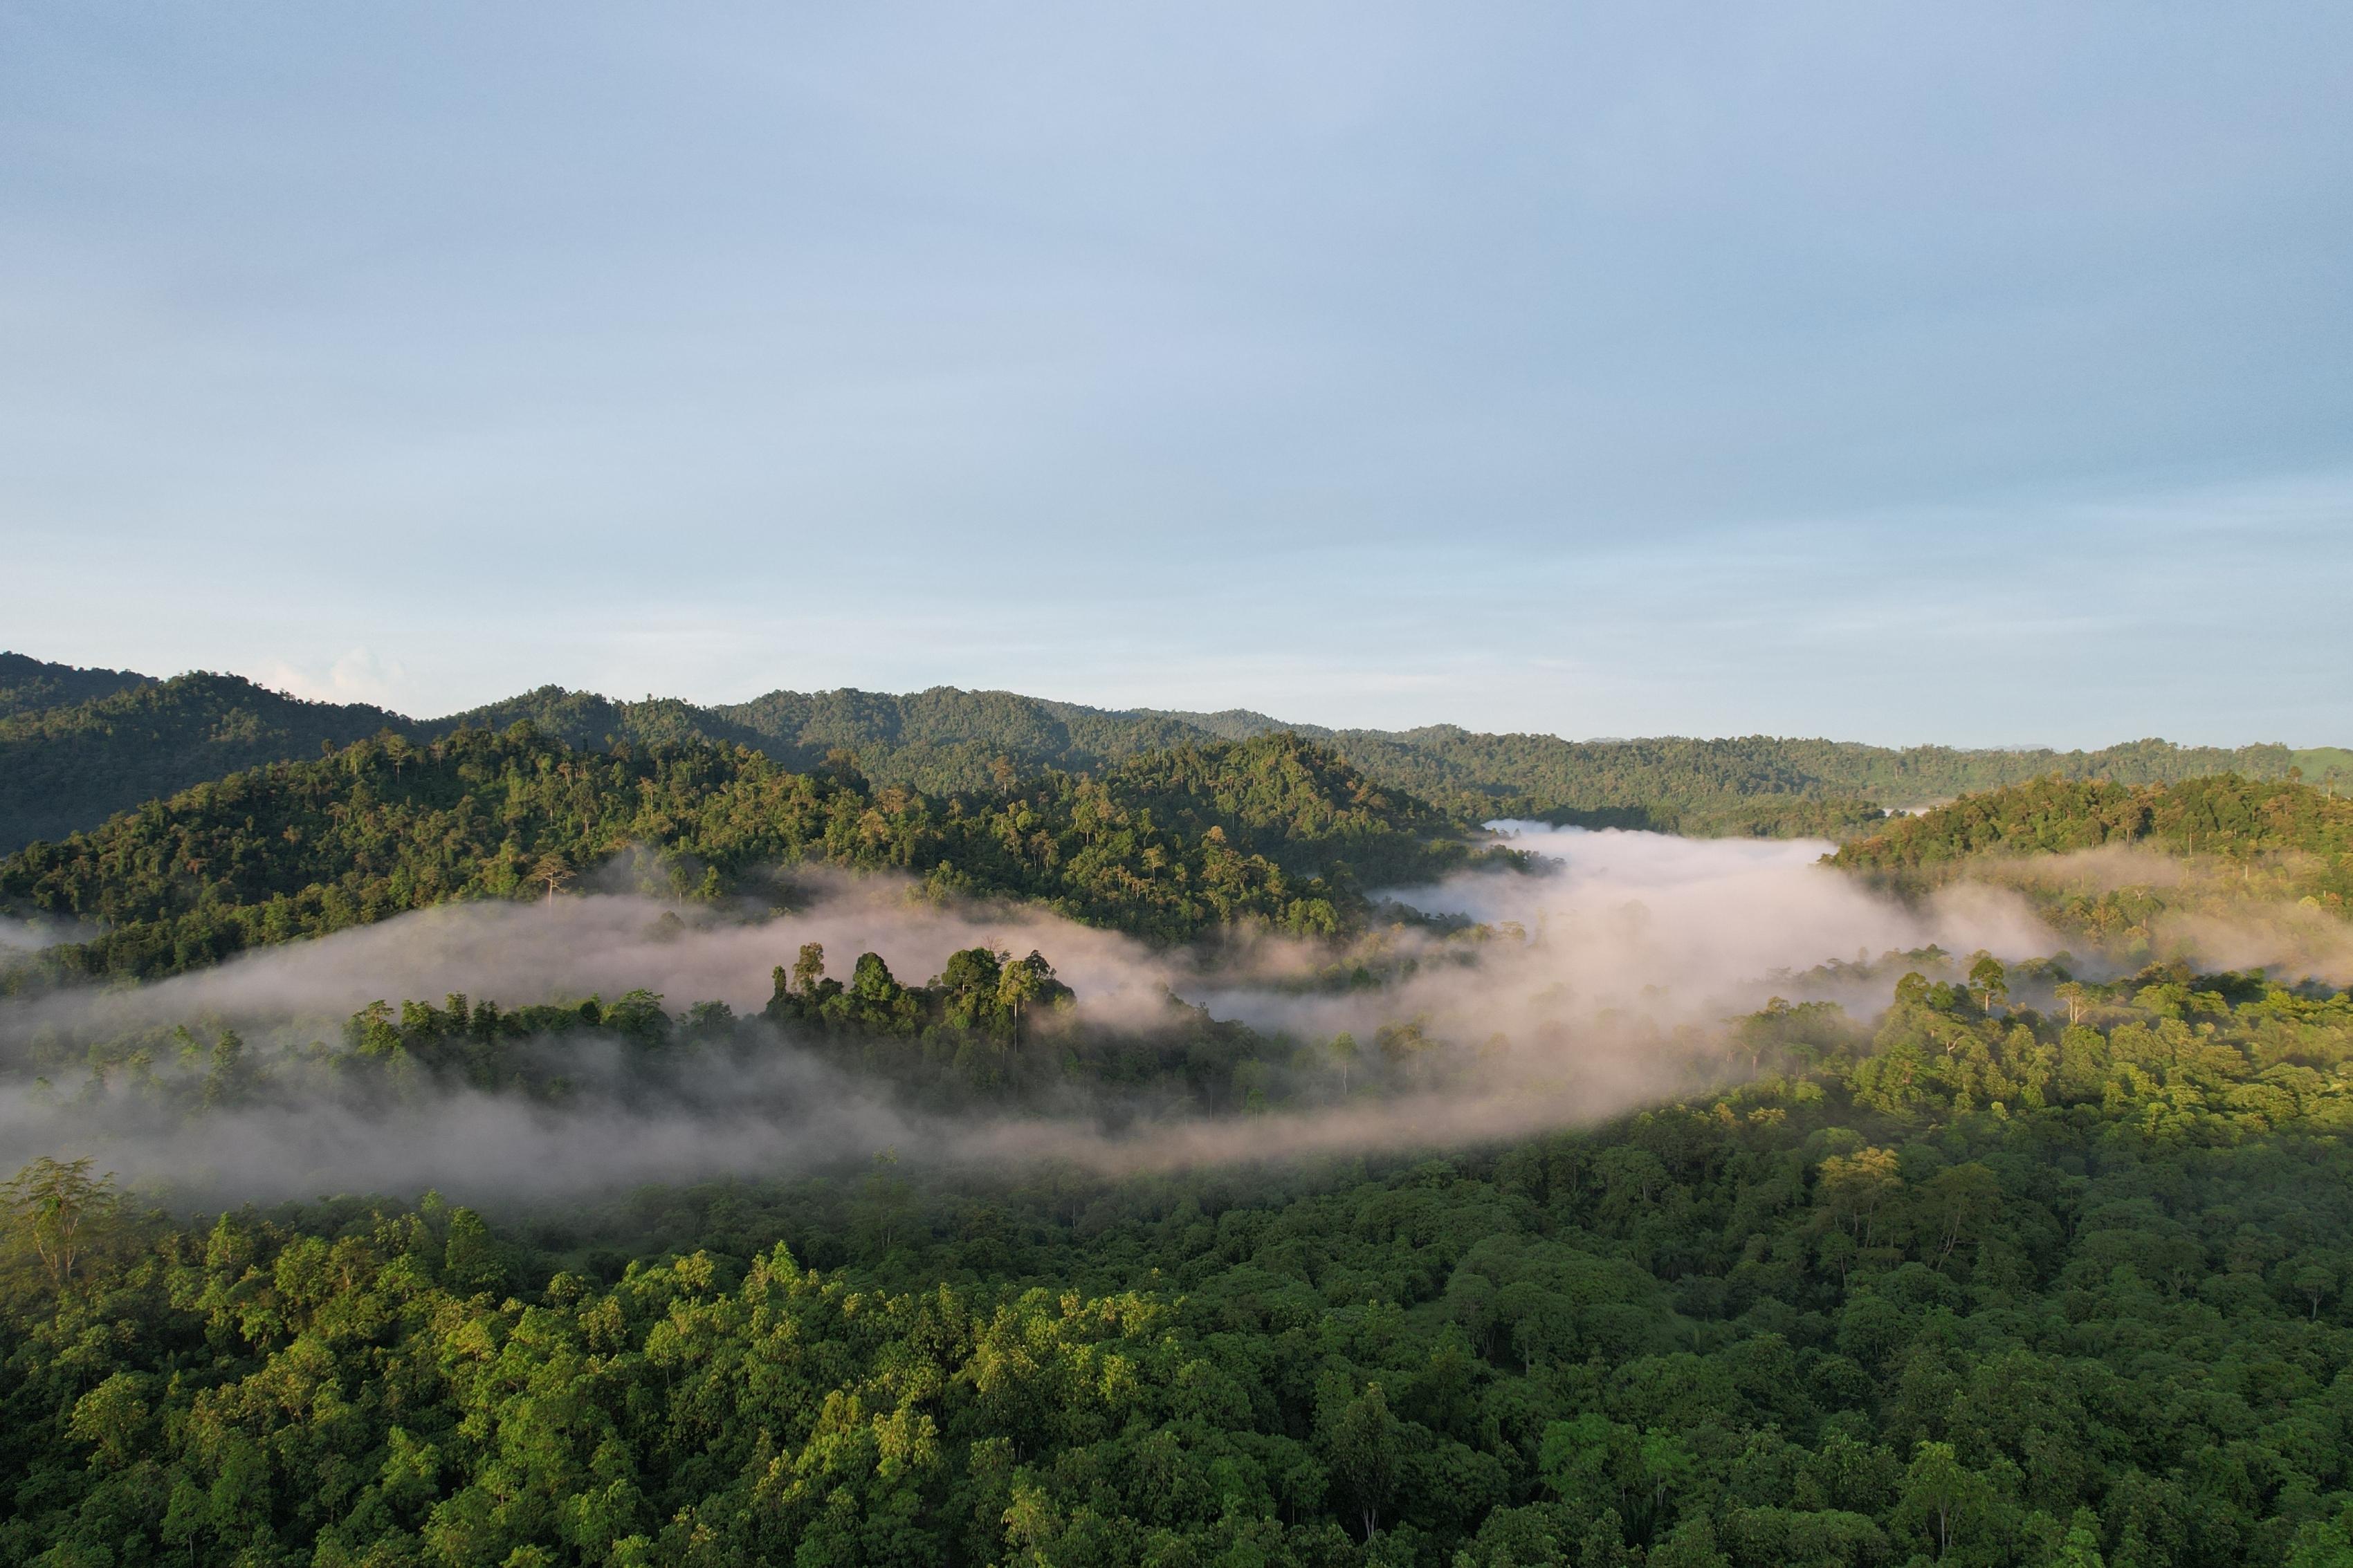 The view of the Merisuli rainforest